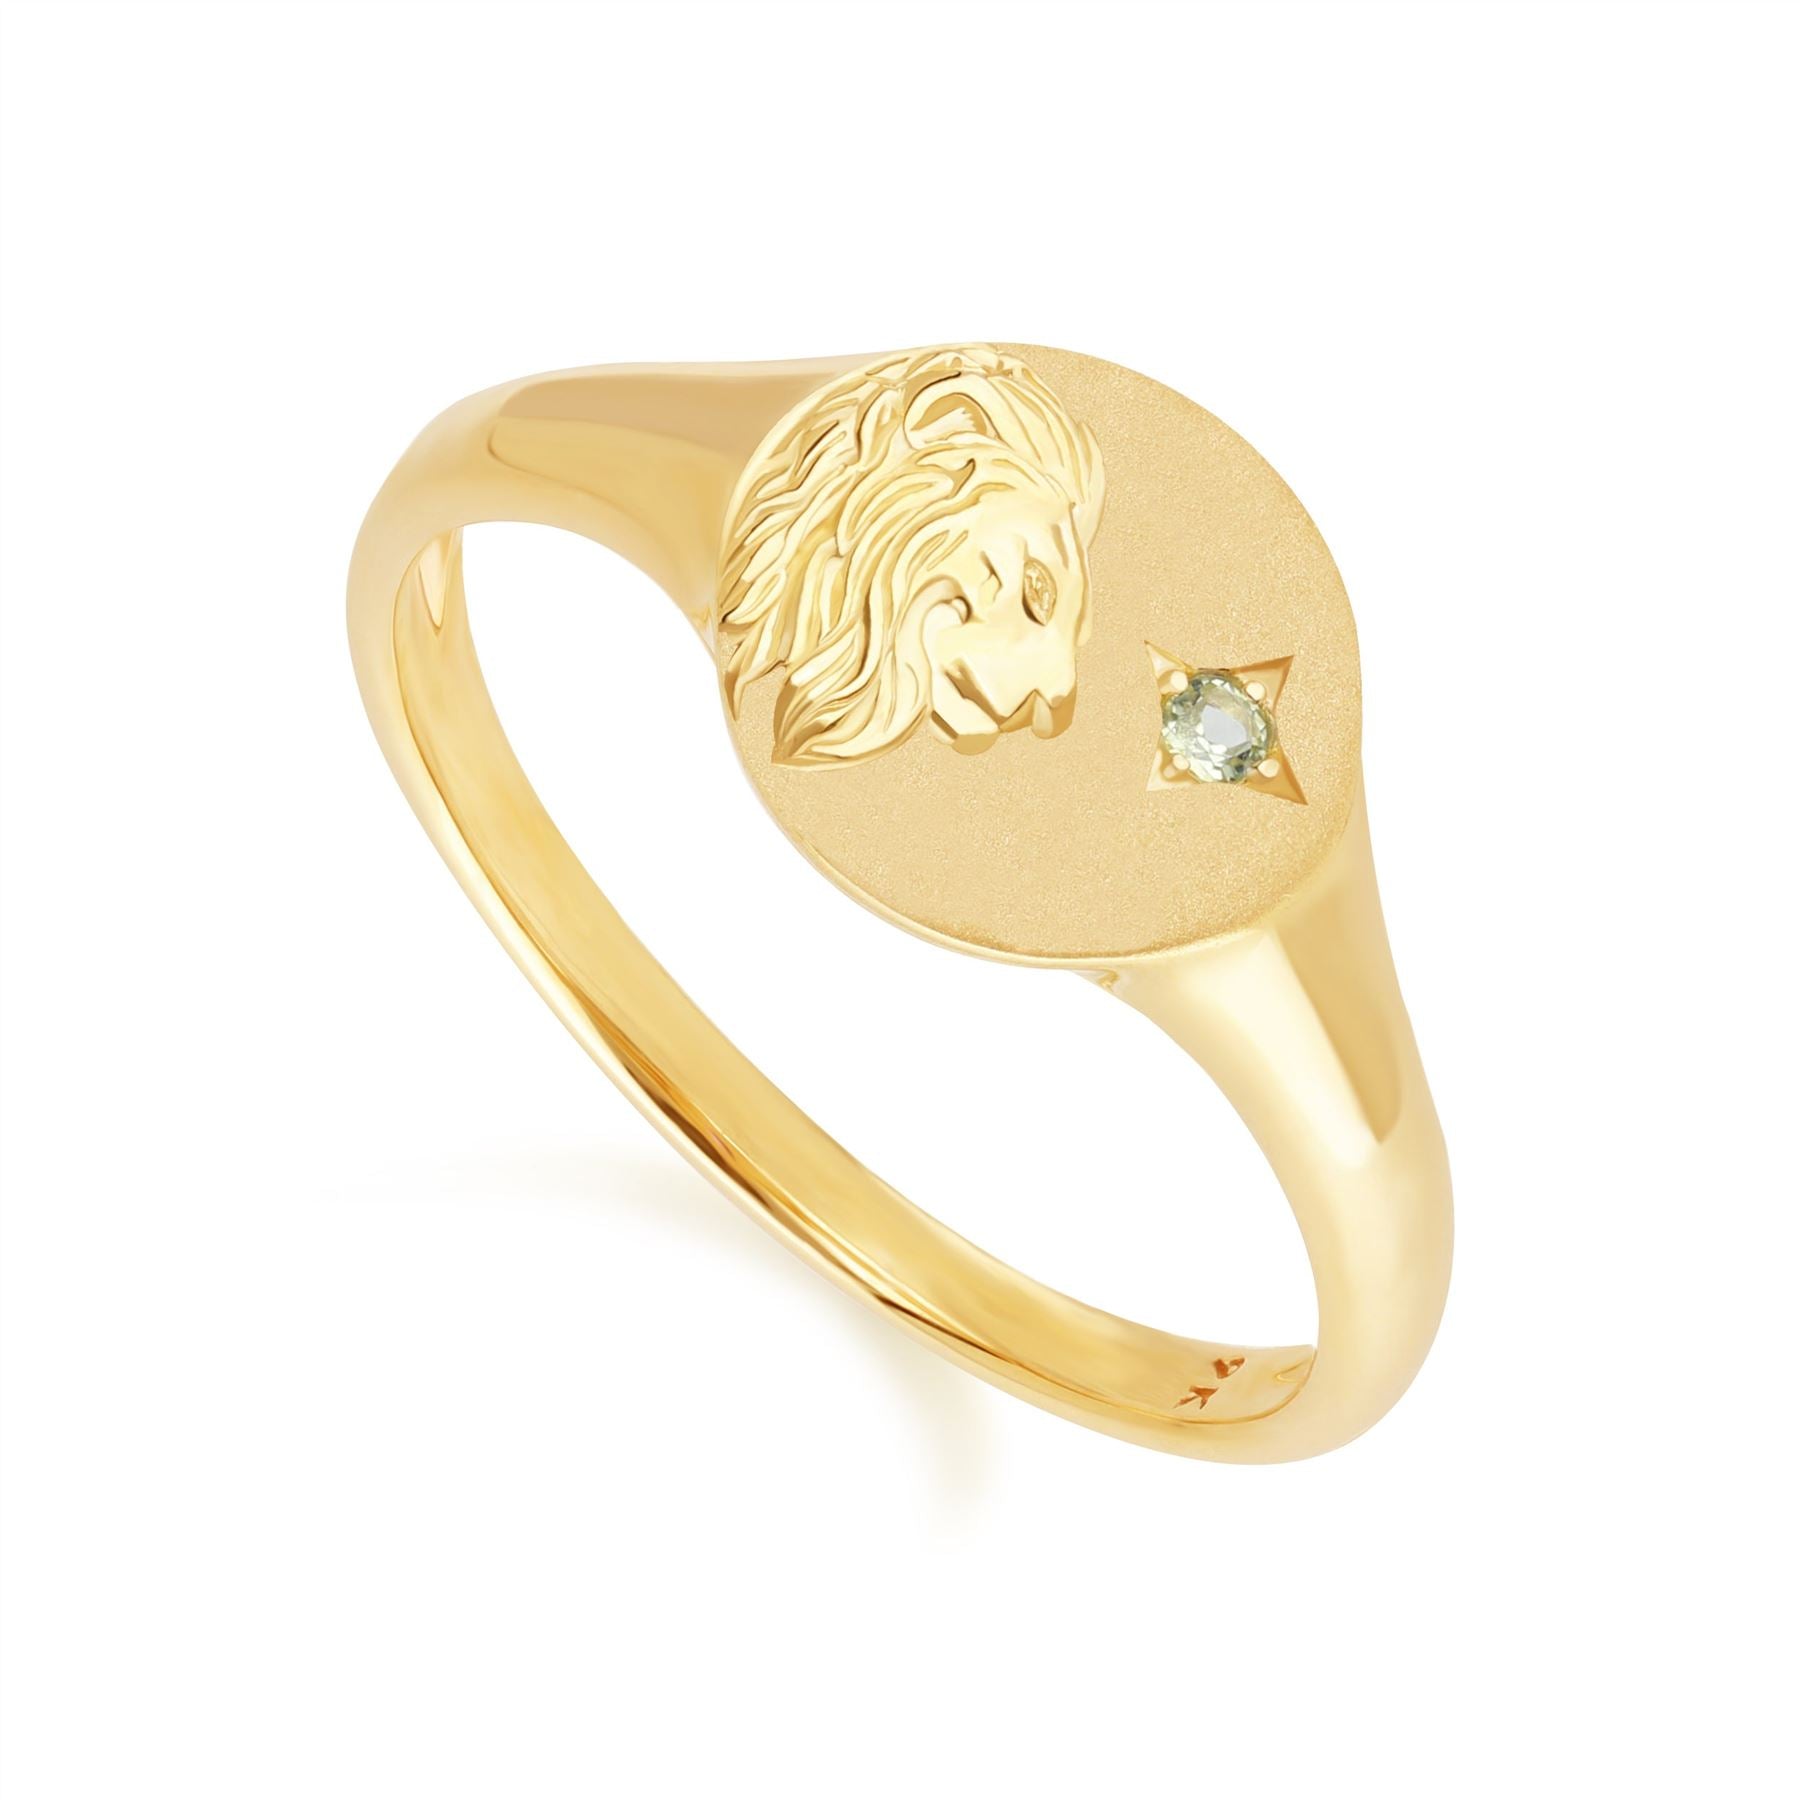 Zodiac Peridot Leo Signet Ring In 9ct Yellow GoldSide 135R2090019